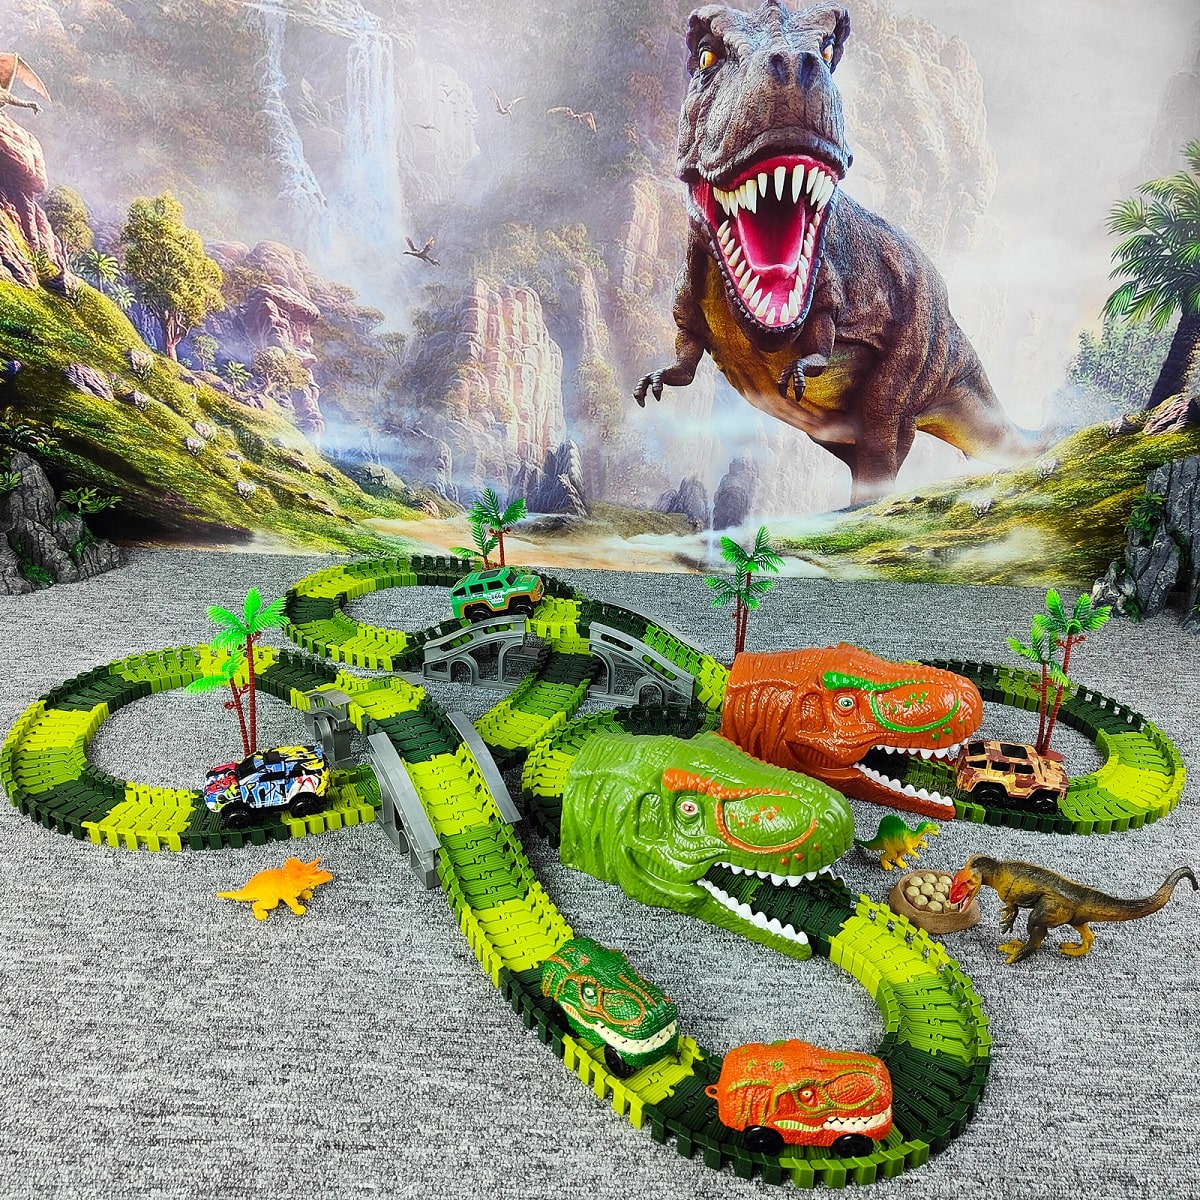 Run Dino Run 2: Play funny baby TRex Dinosaur racing in a